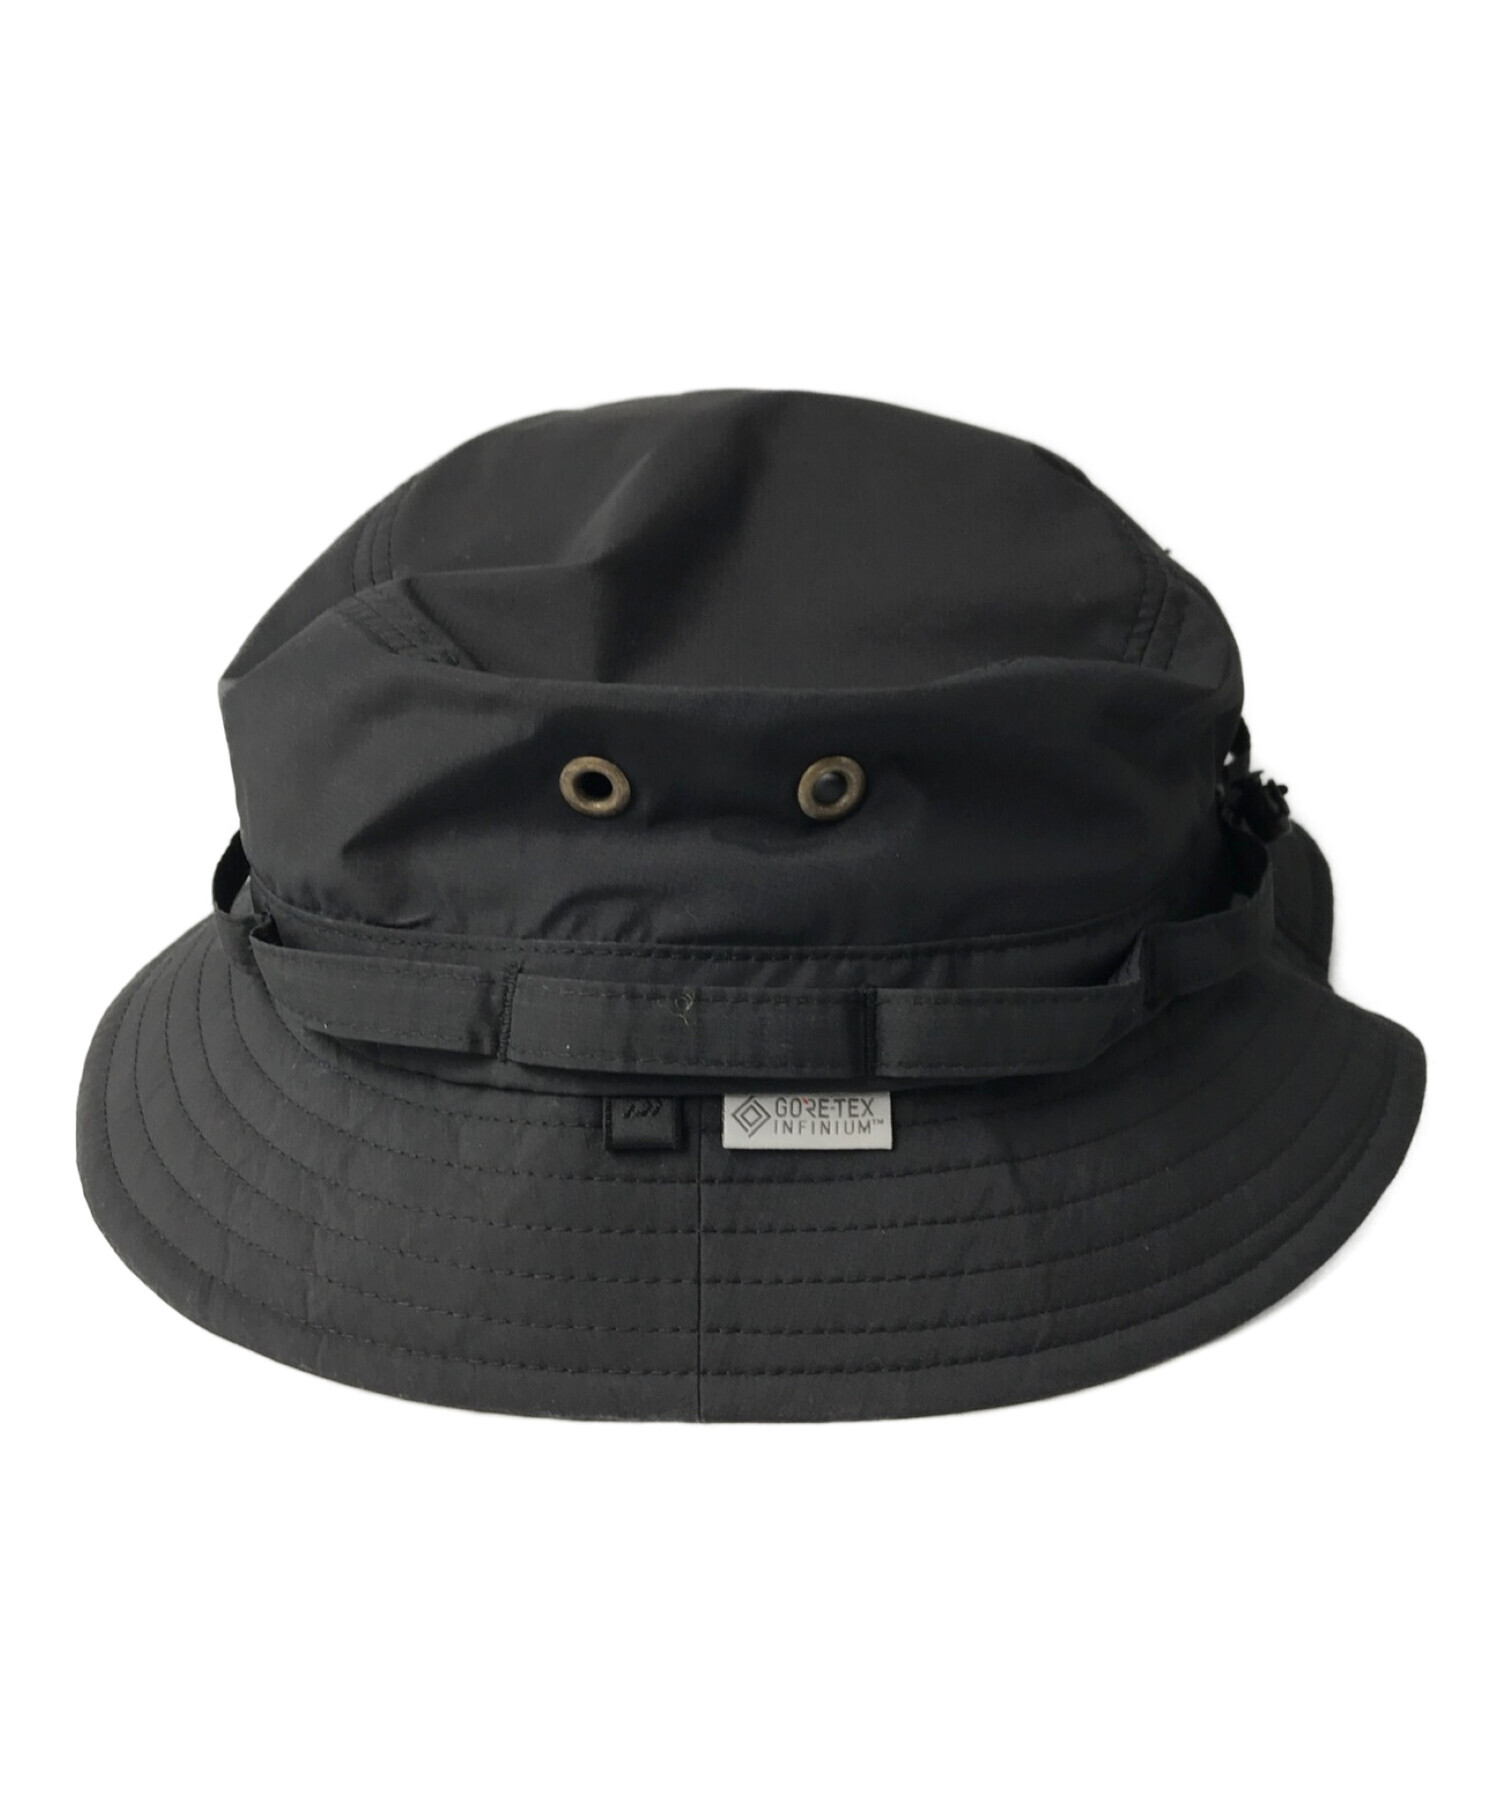 DAIWA PIER39 (ダイワ ピア39) GORE-TEX INFINIUM Tech Jungle hat ブラック サイズ:FREE